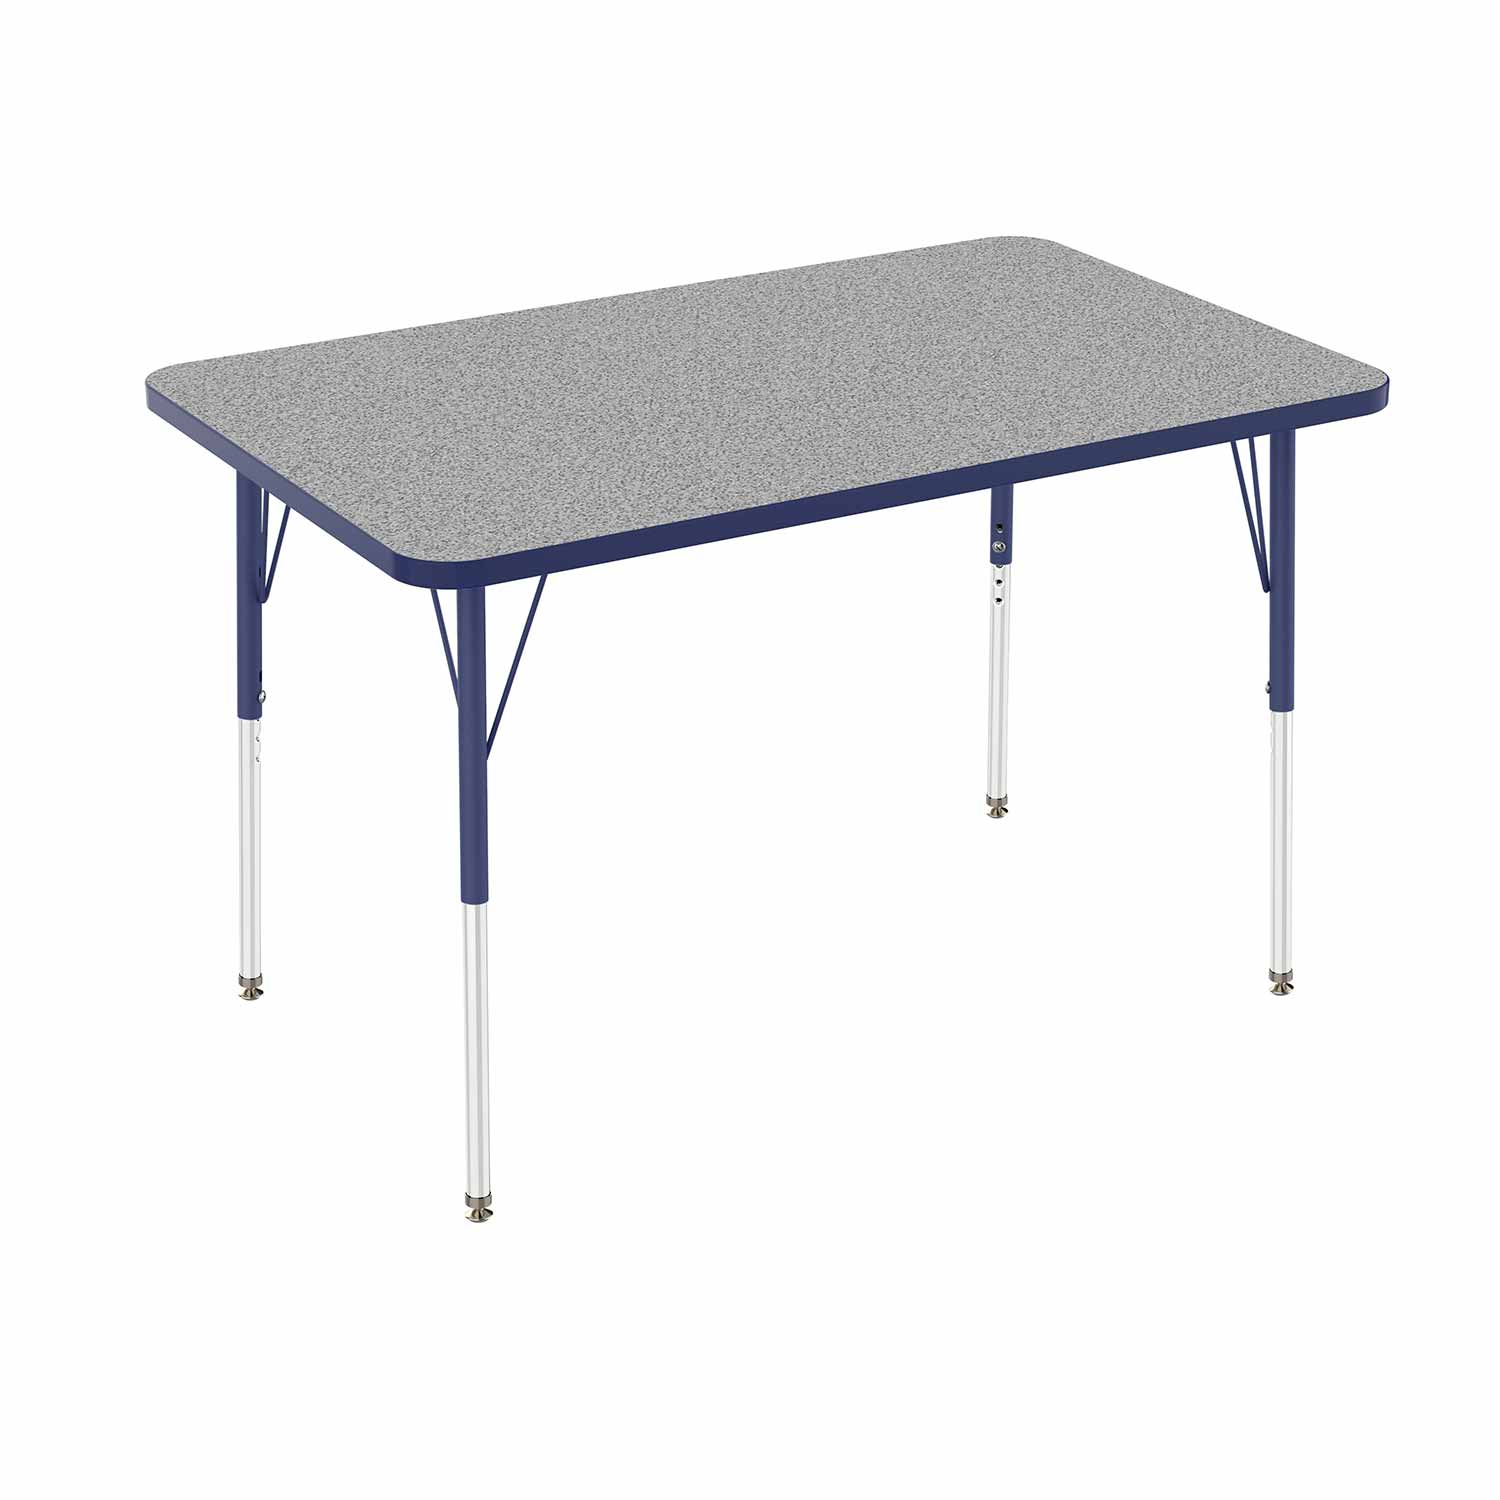 Activity Table, Rectangle 30" x 48", Grey Top Navy Edge & Legs